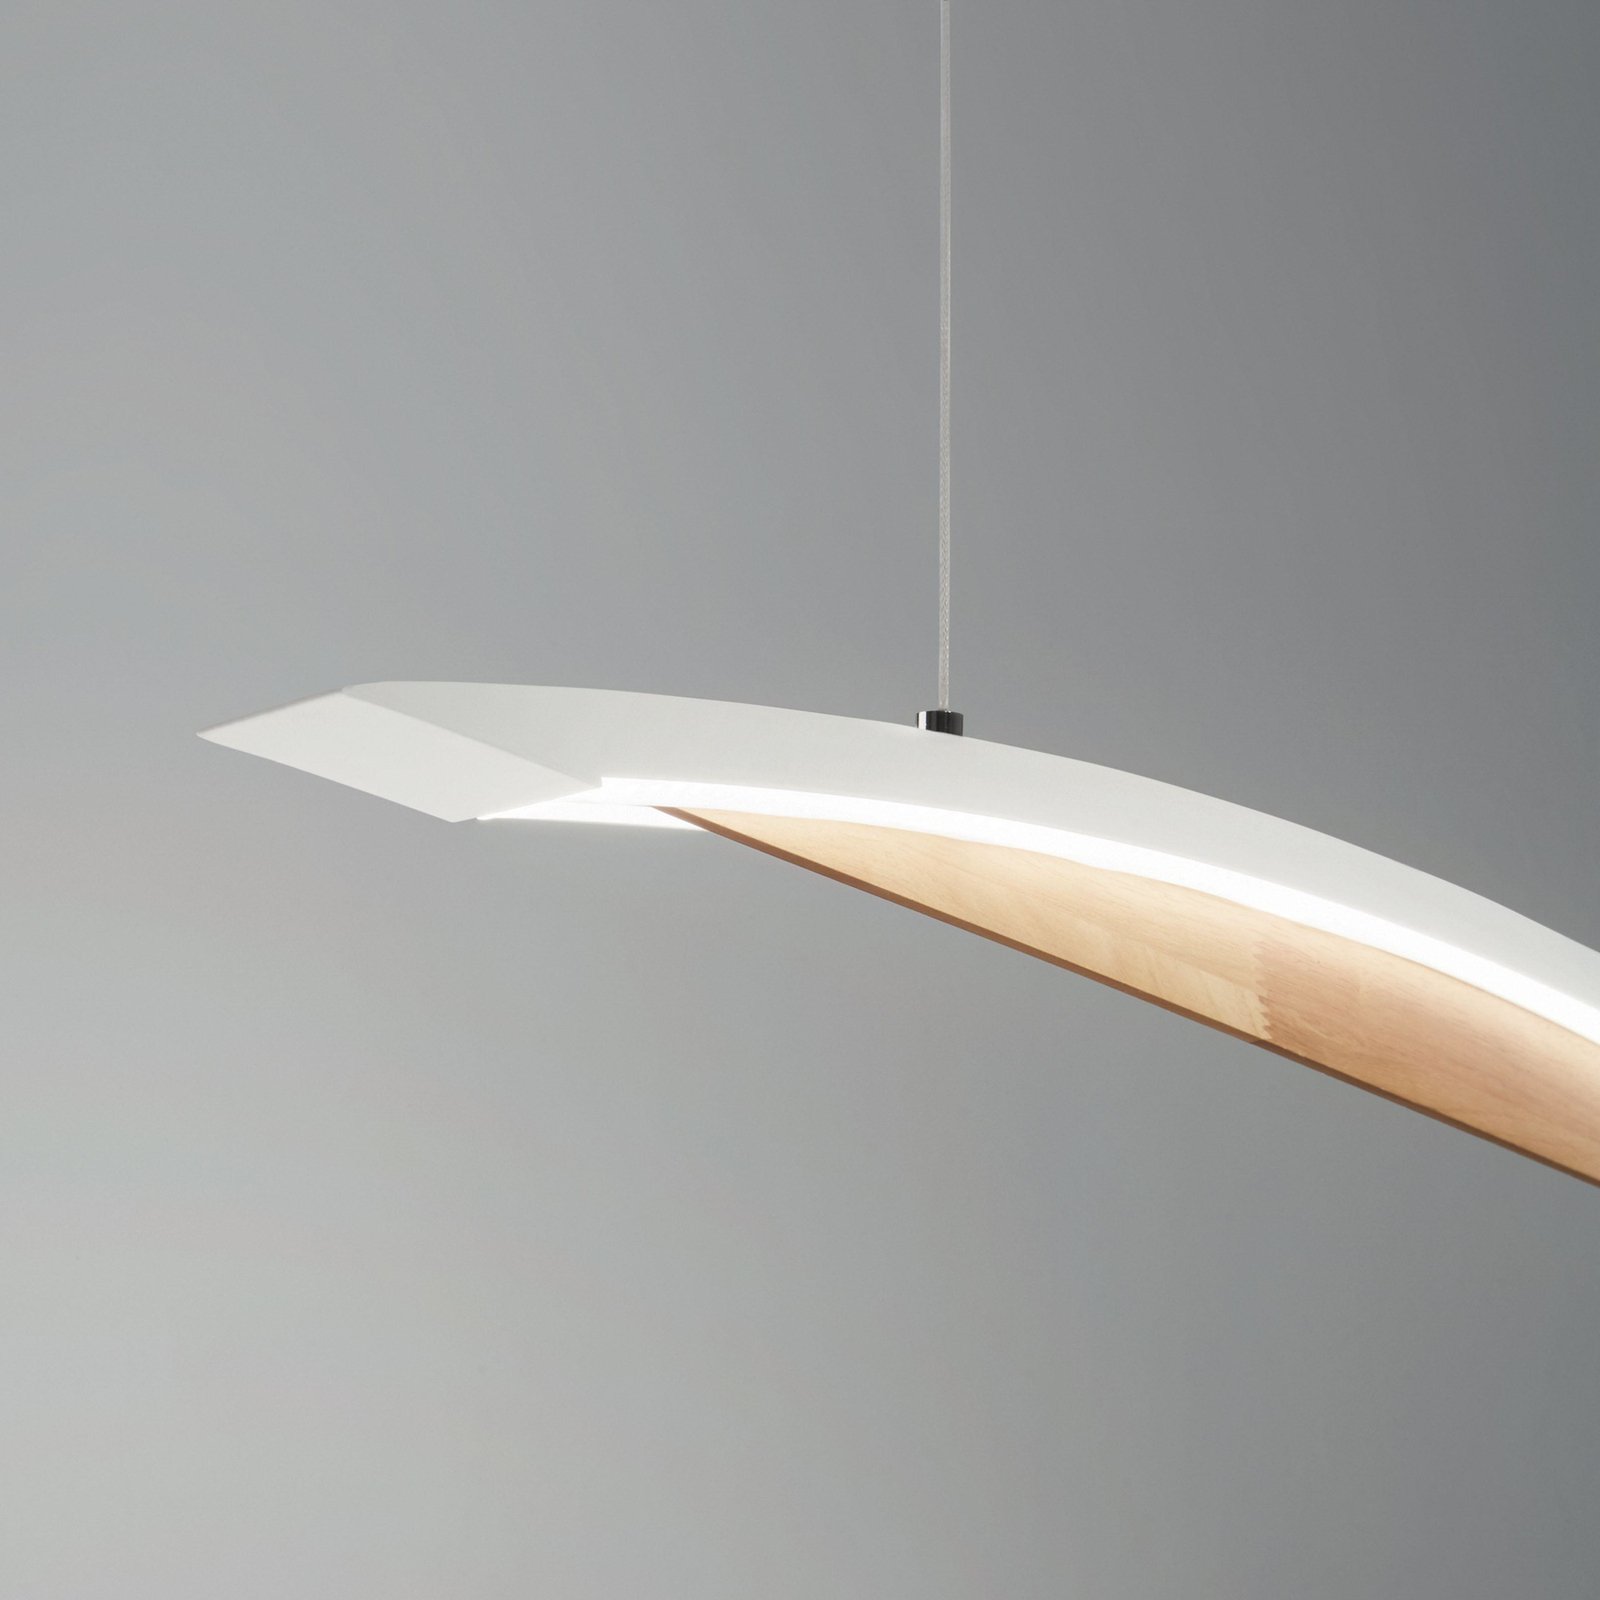 Cordoba hanglamp, lengte 110 cm, metaal/hout, dimbaar